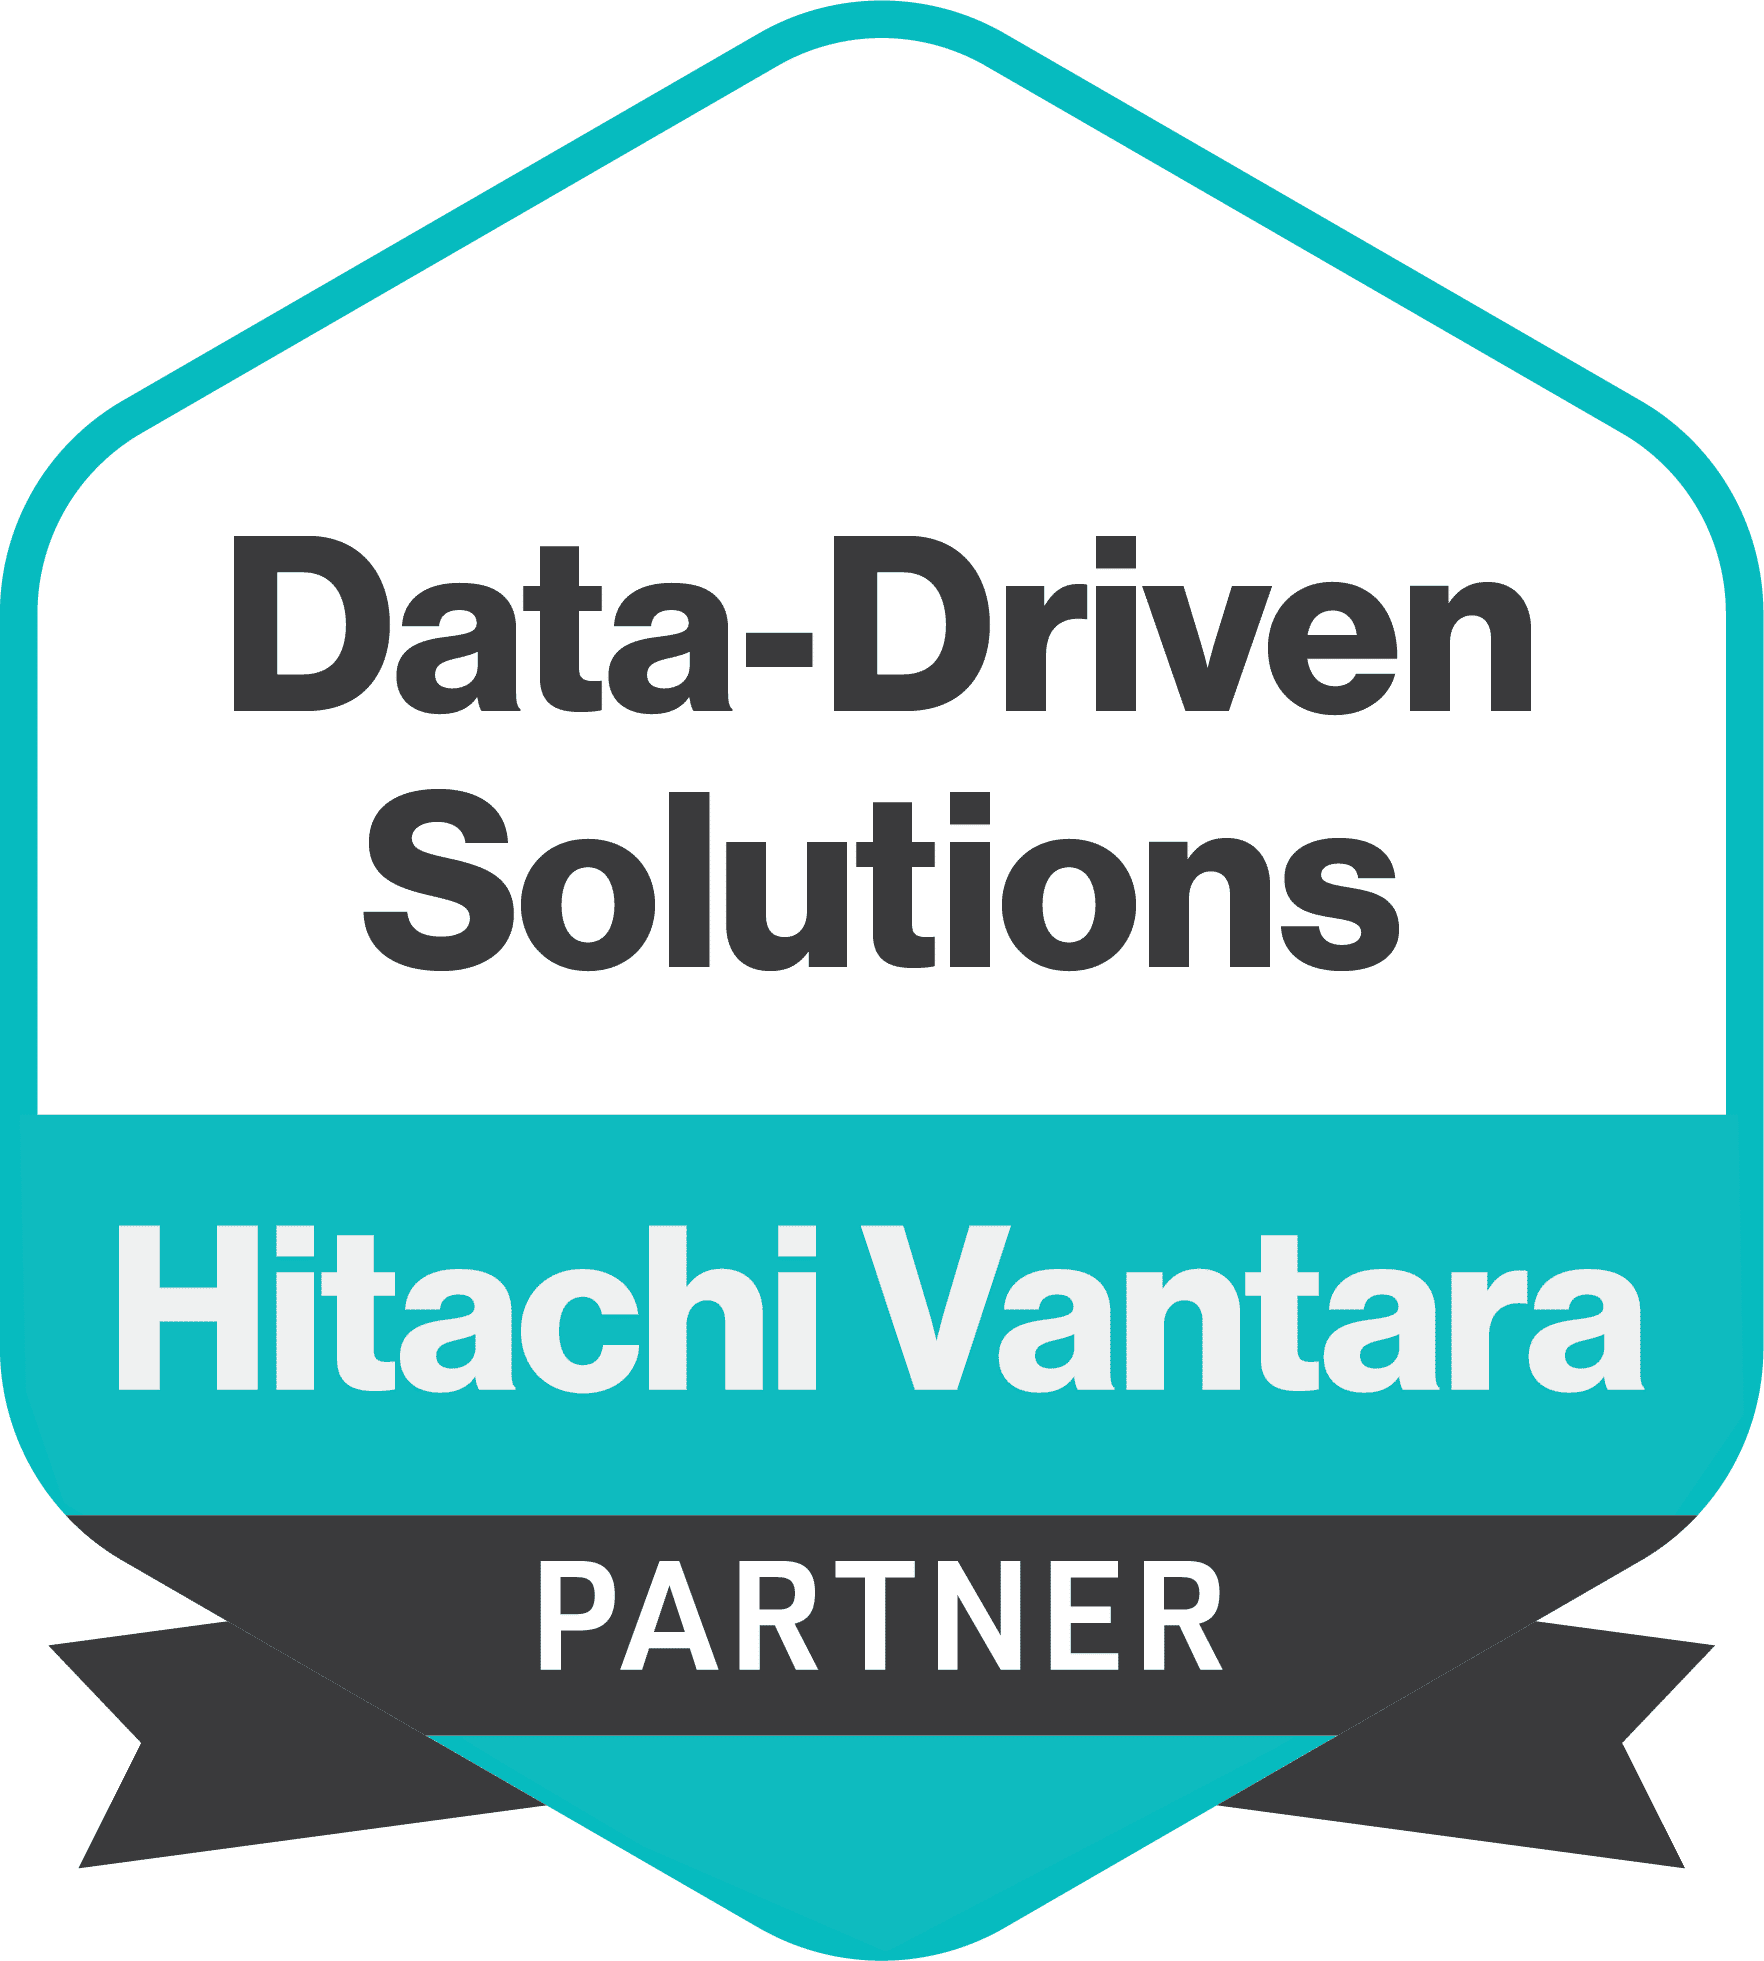 Partner logo of Data Driven Solutions